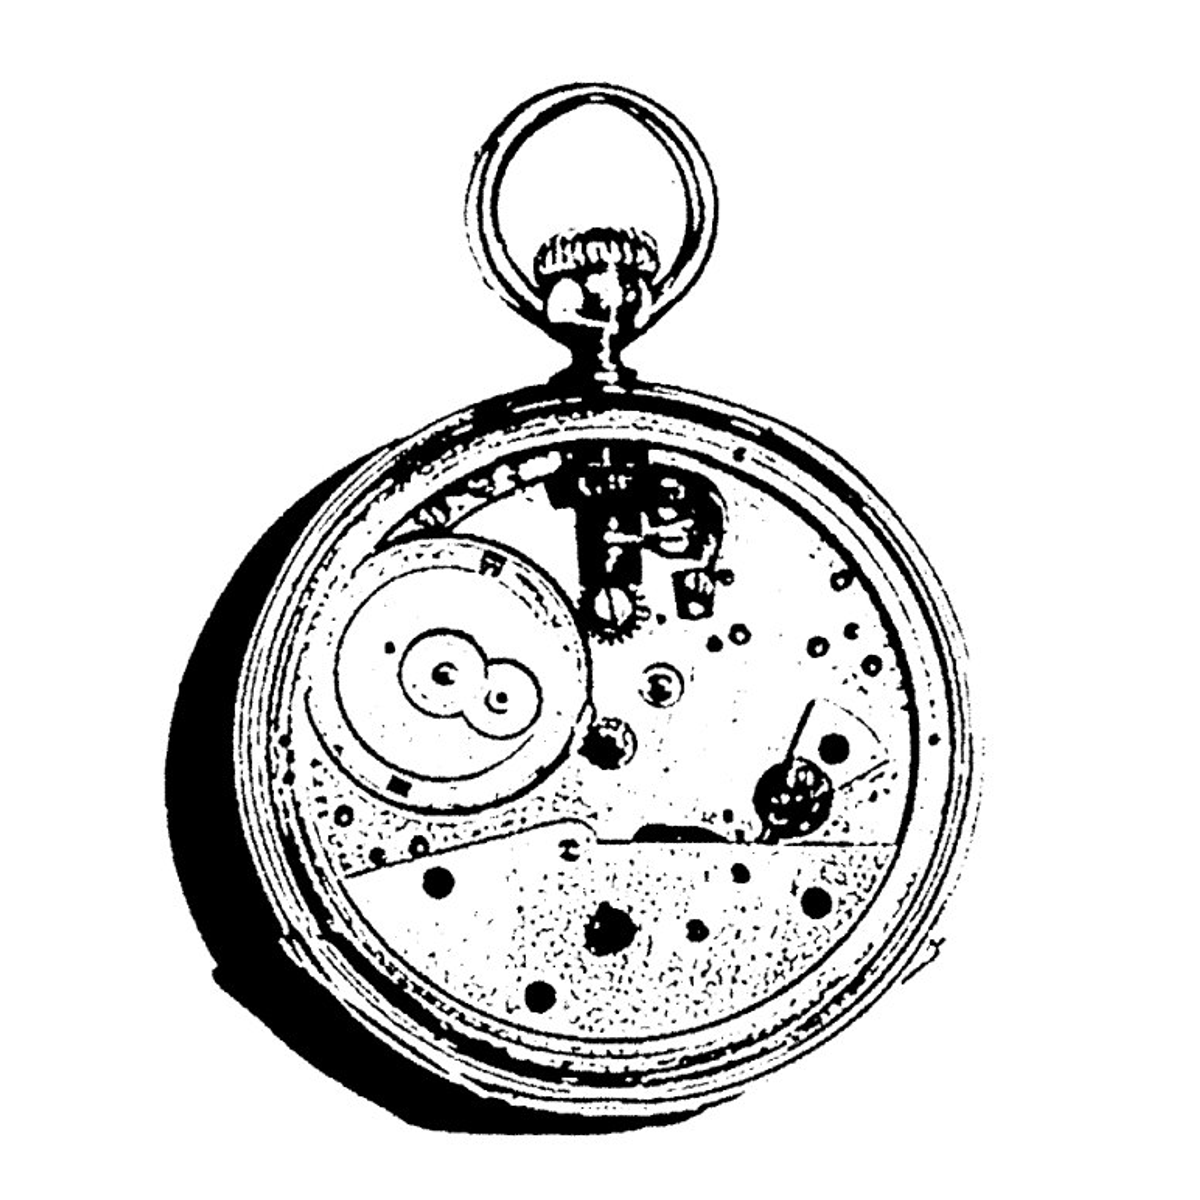 1830 - Pocket watch